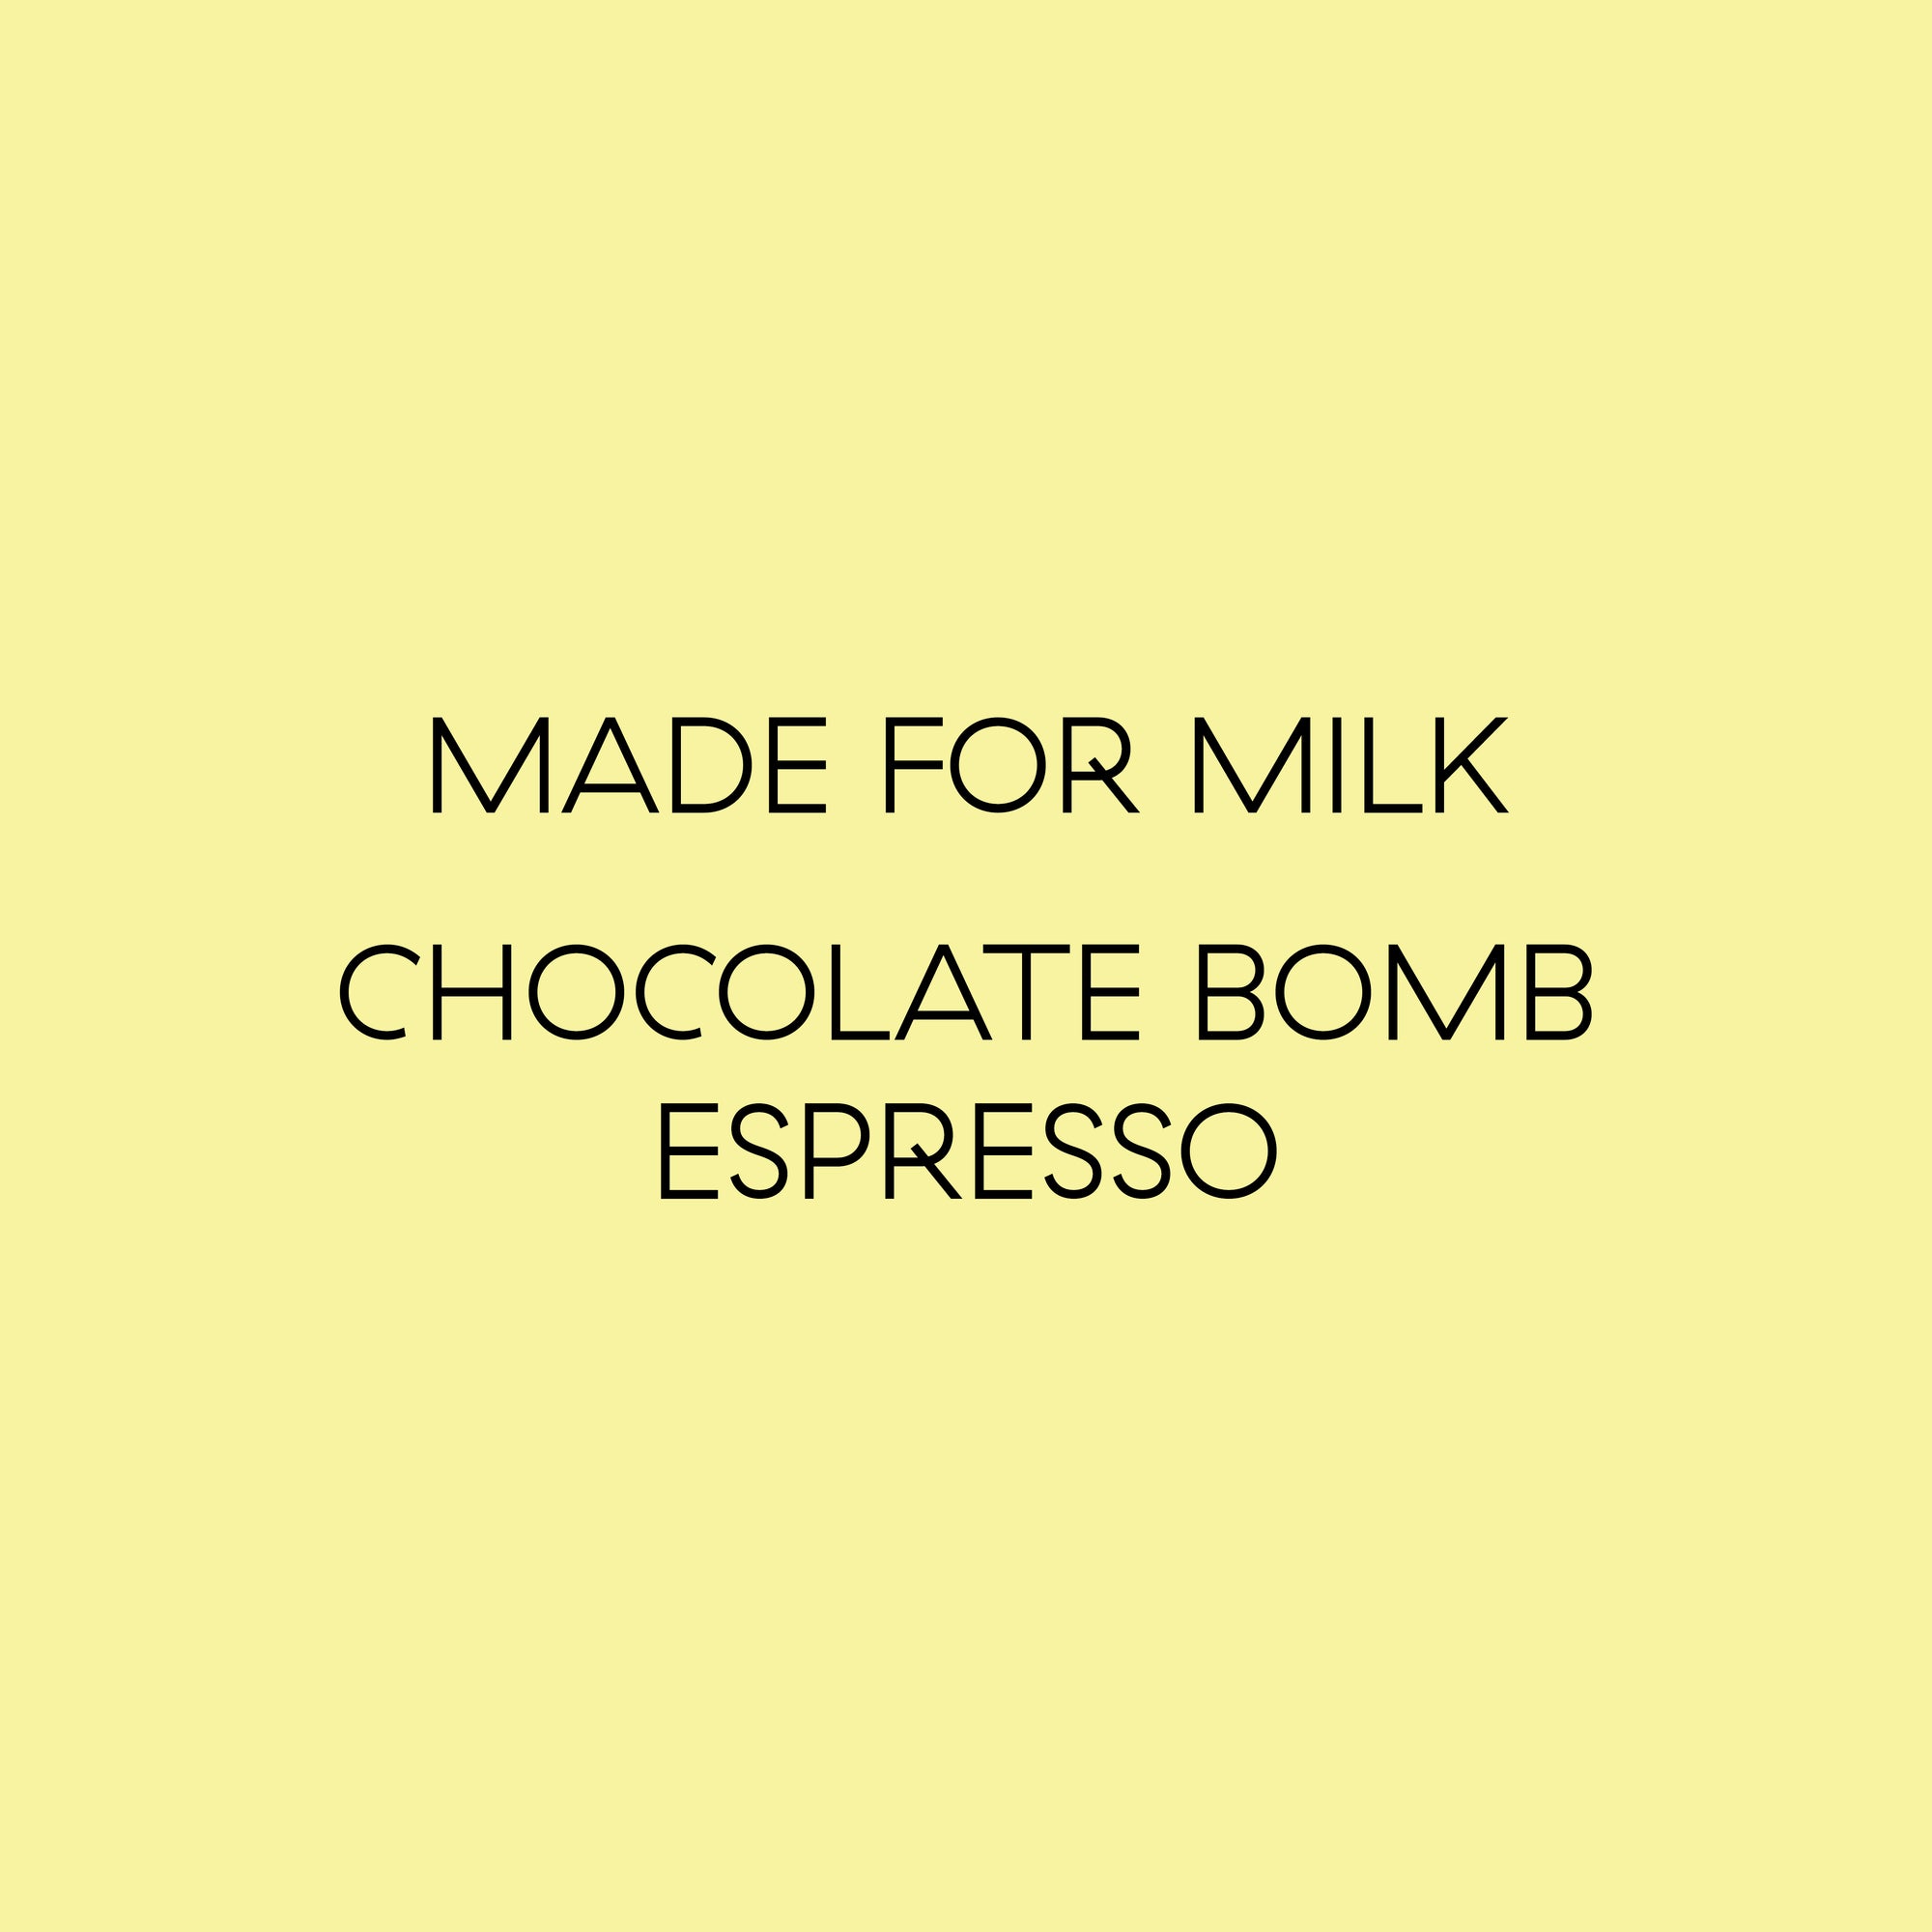 CoCo espresso blend made for milk chocolate bomb